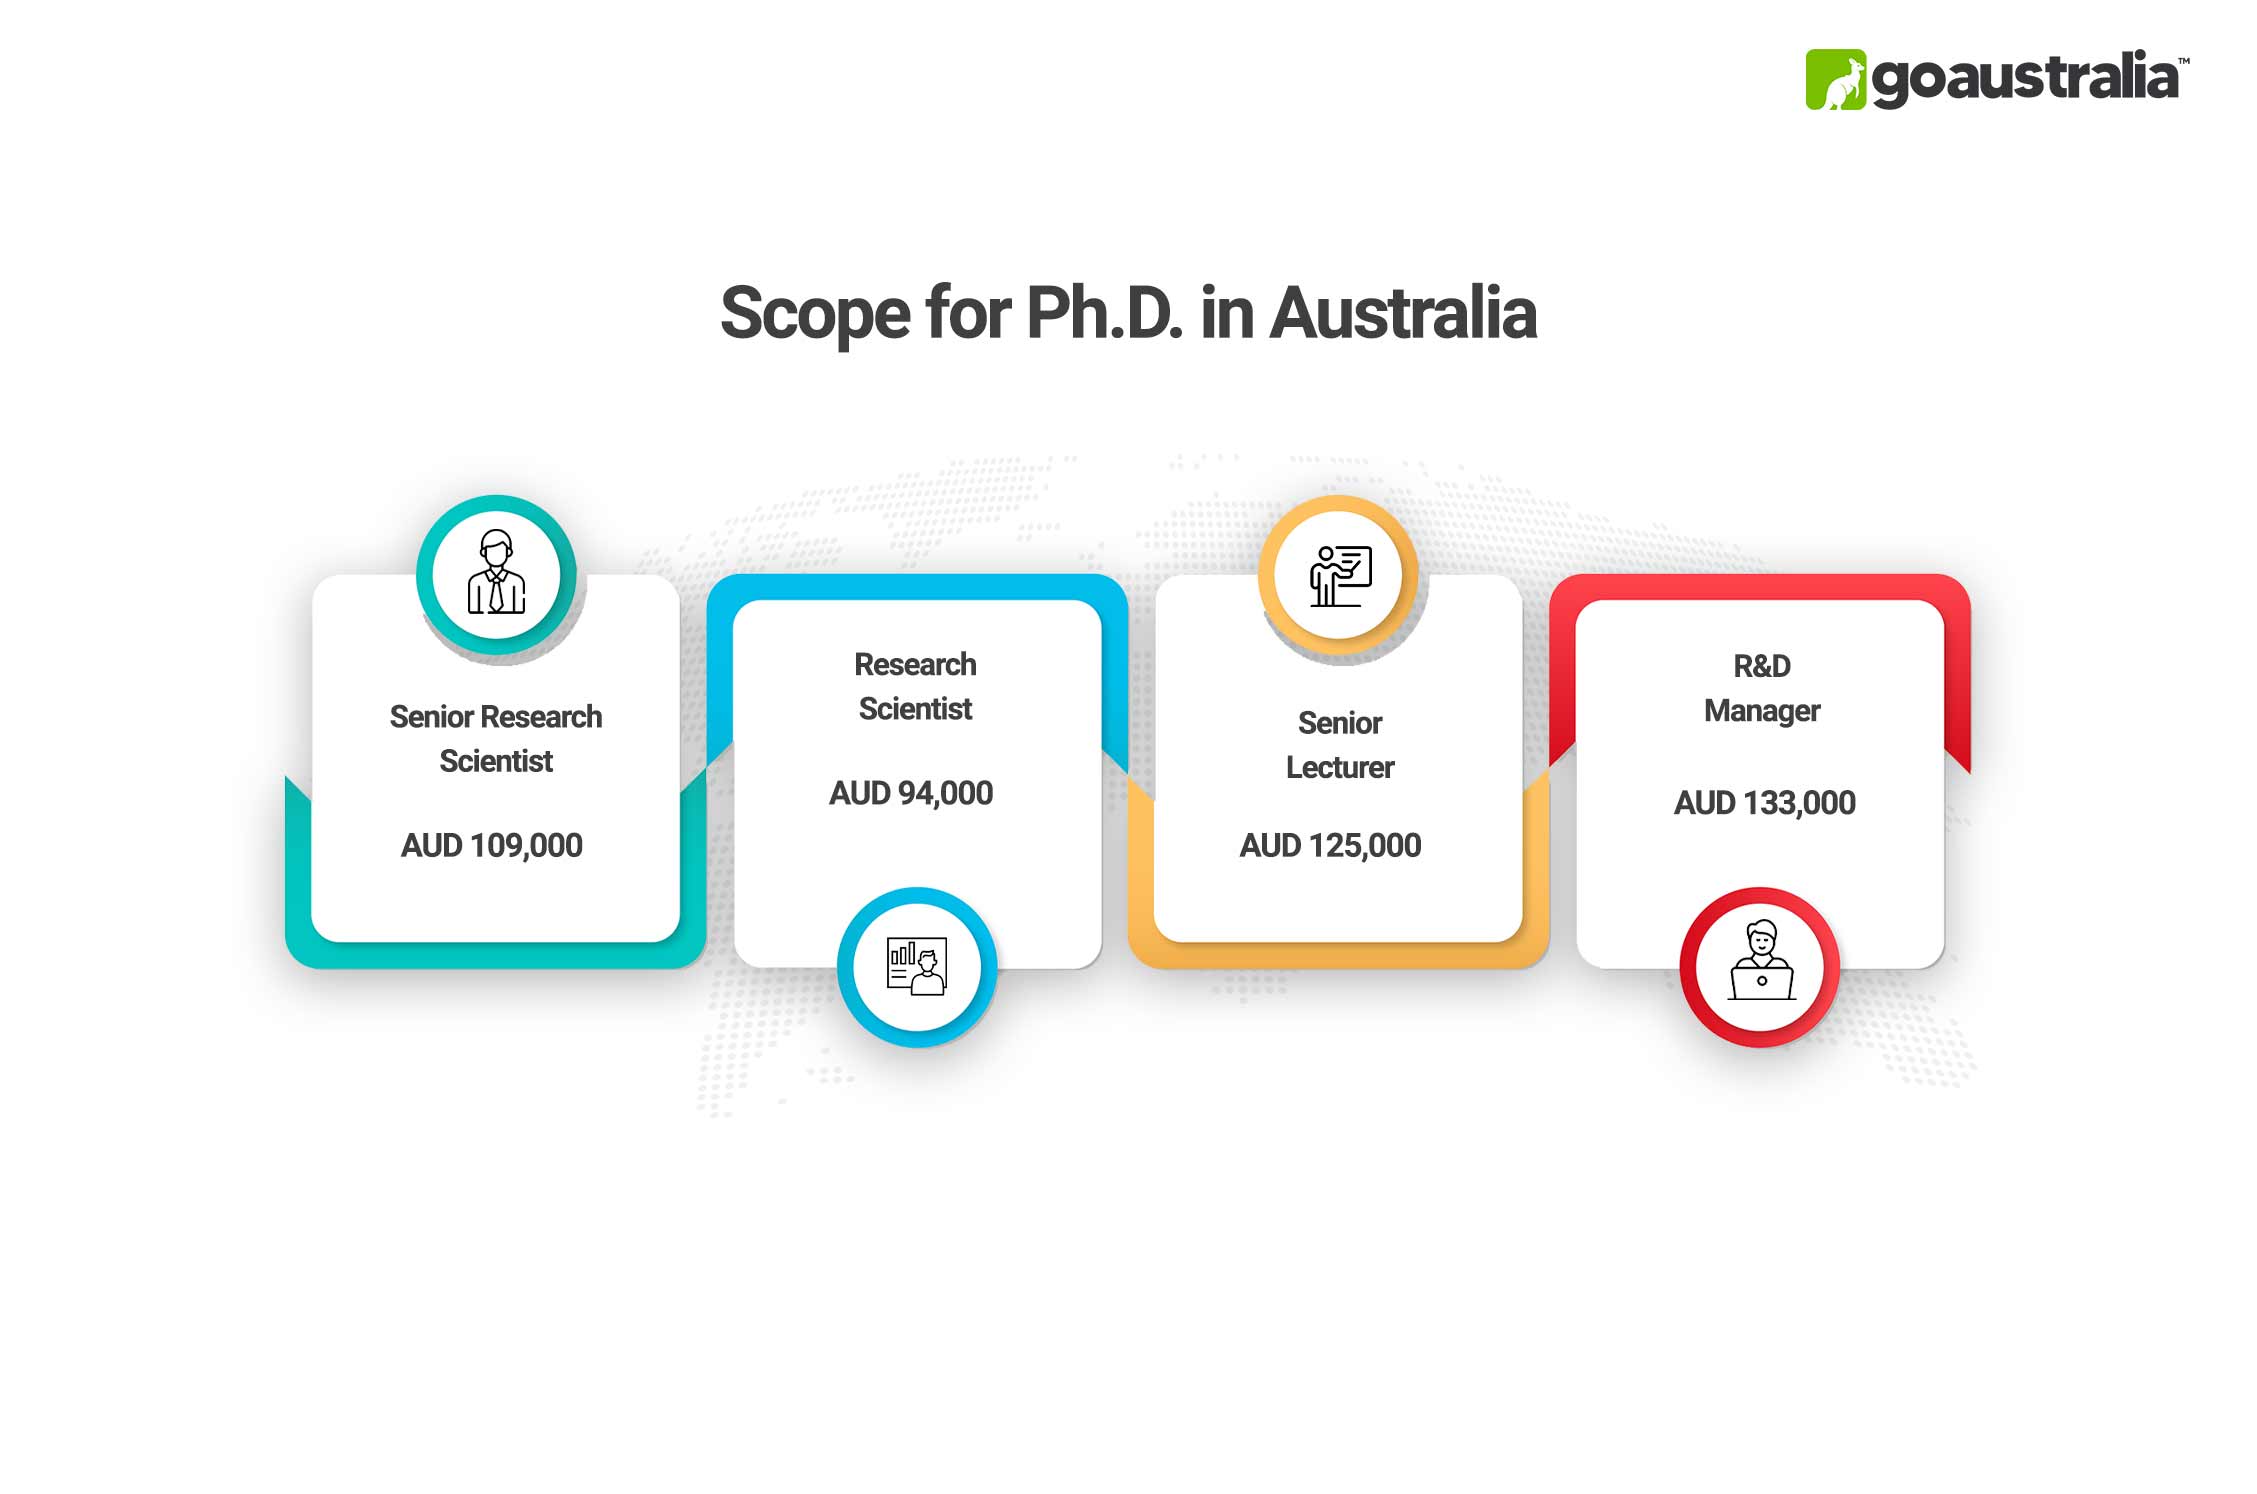 phd in Australia Scope